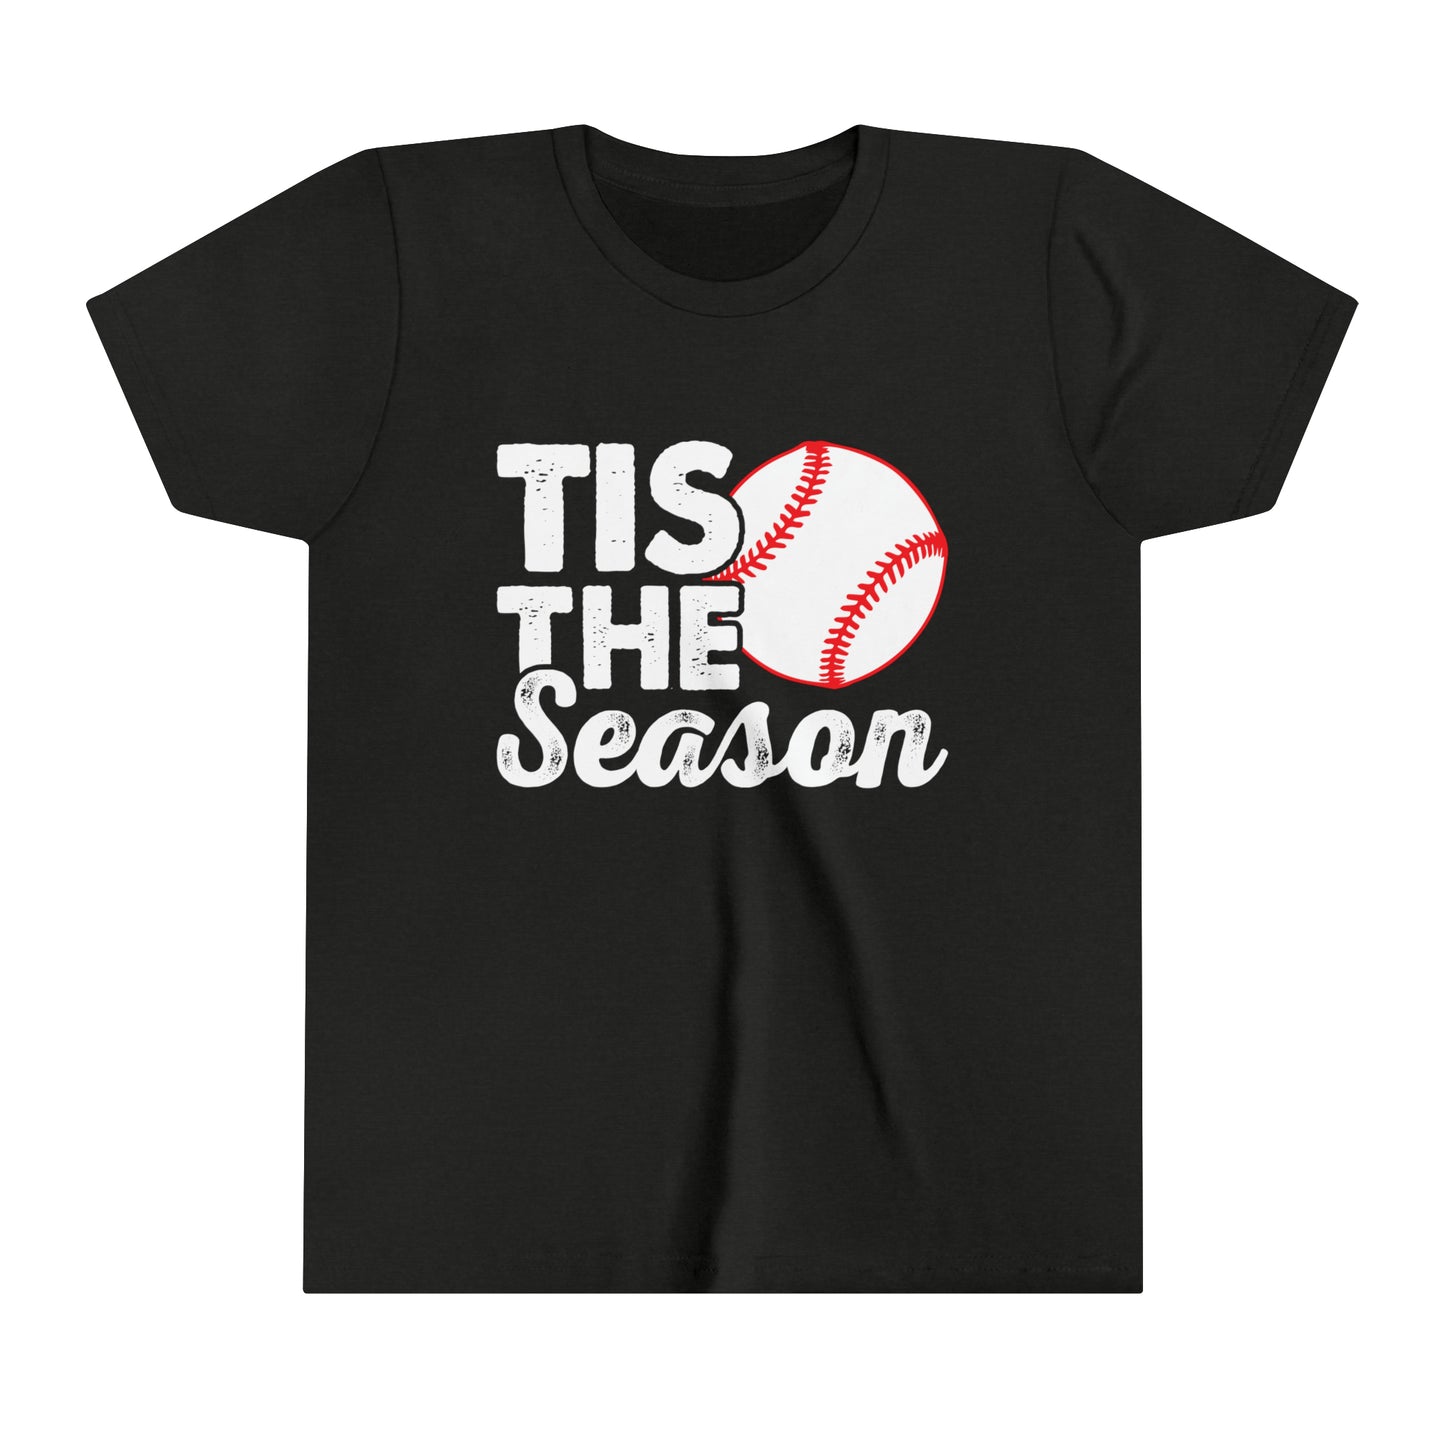 Tis The Season Baseball Boy's Youth Shirt